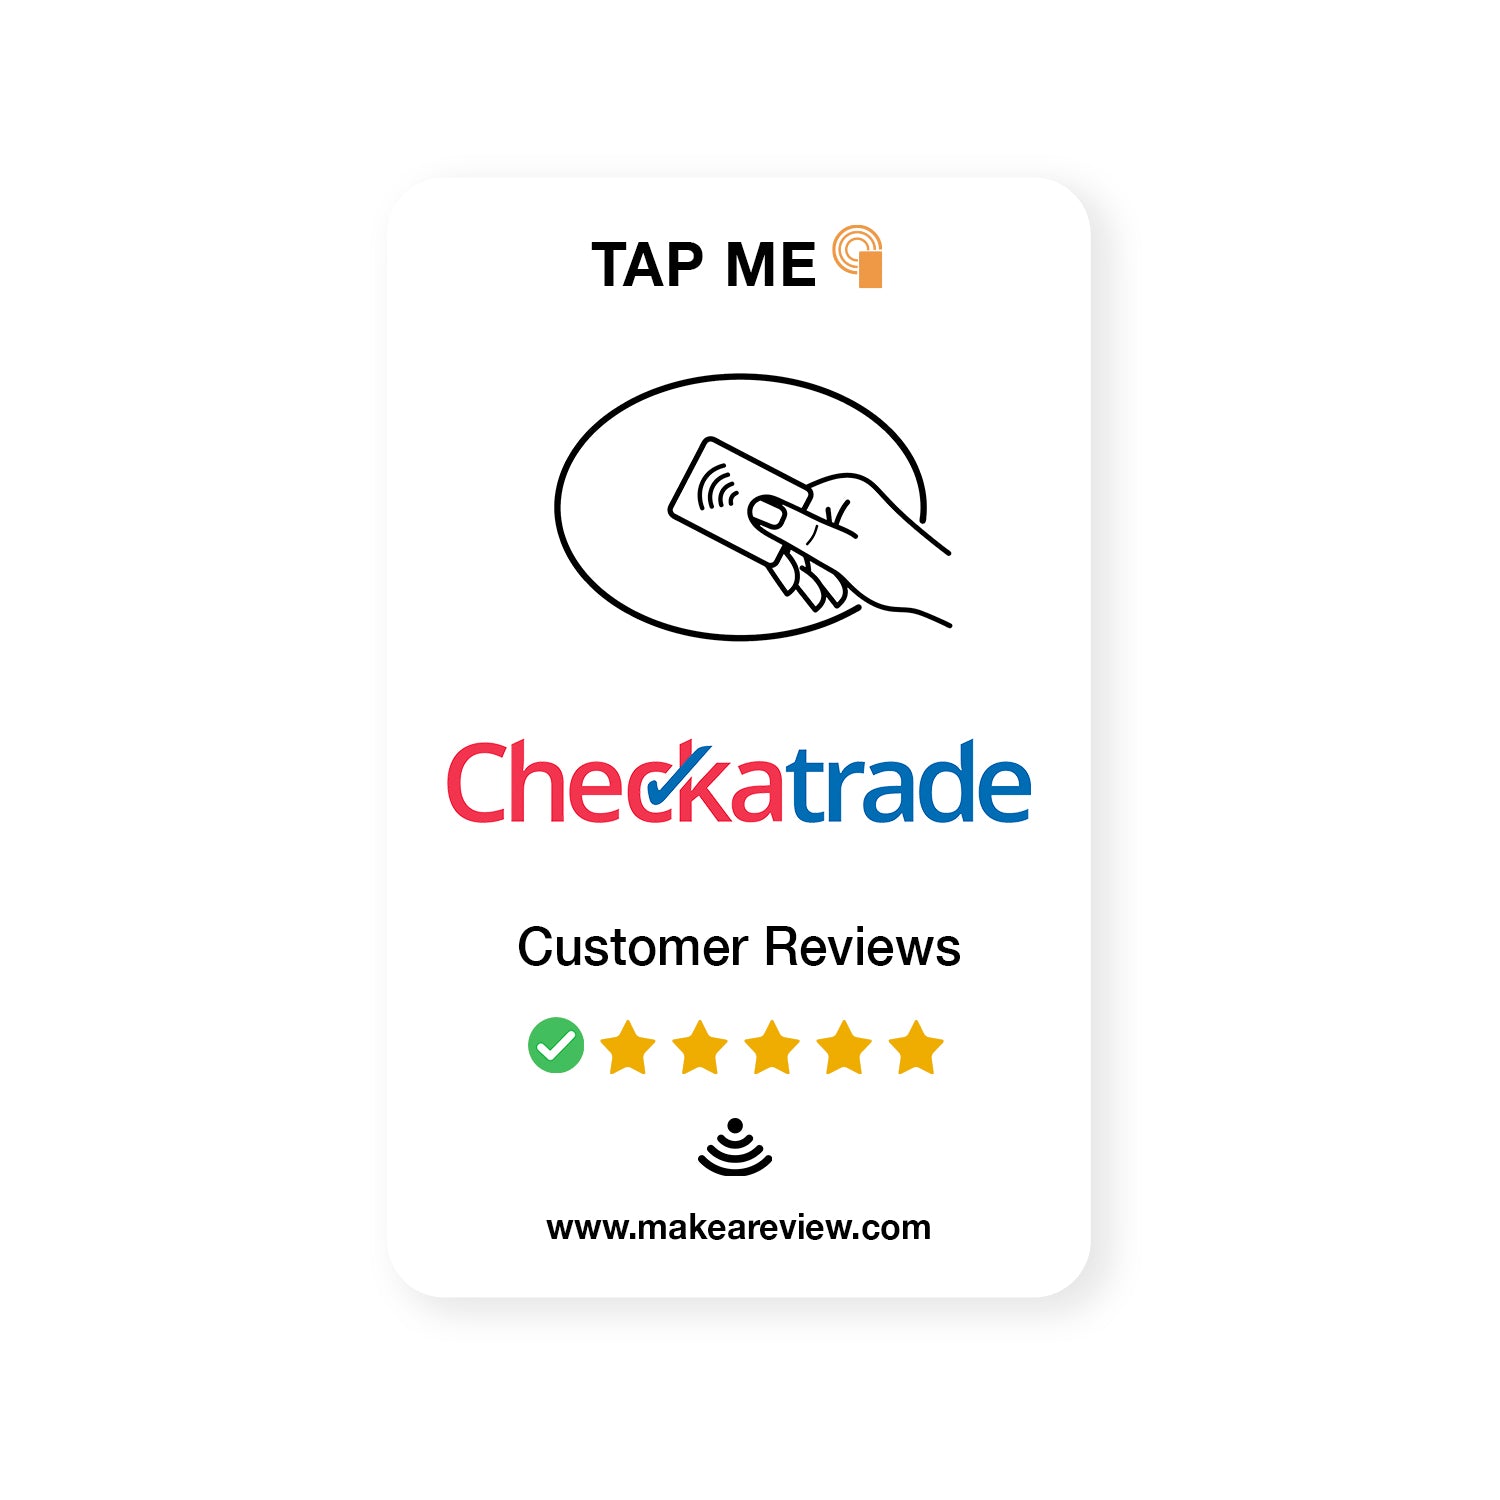 Checkatrade Review Card